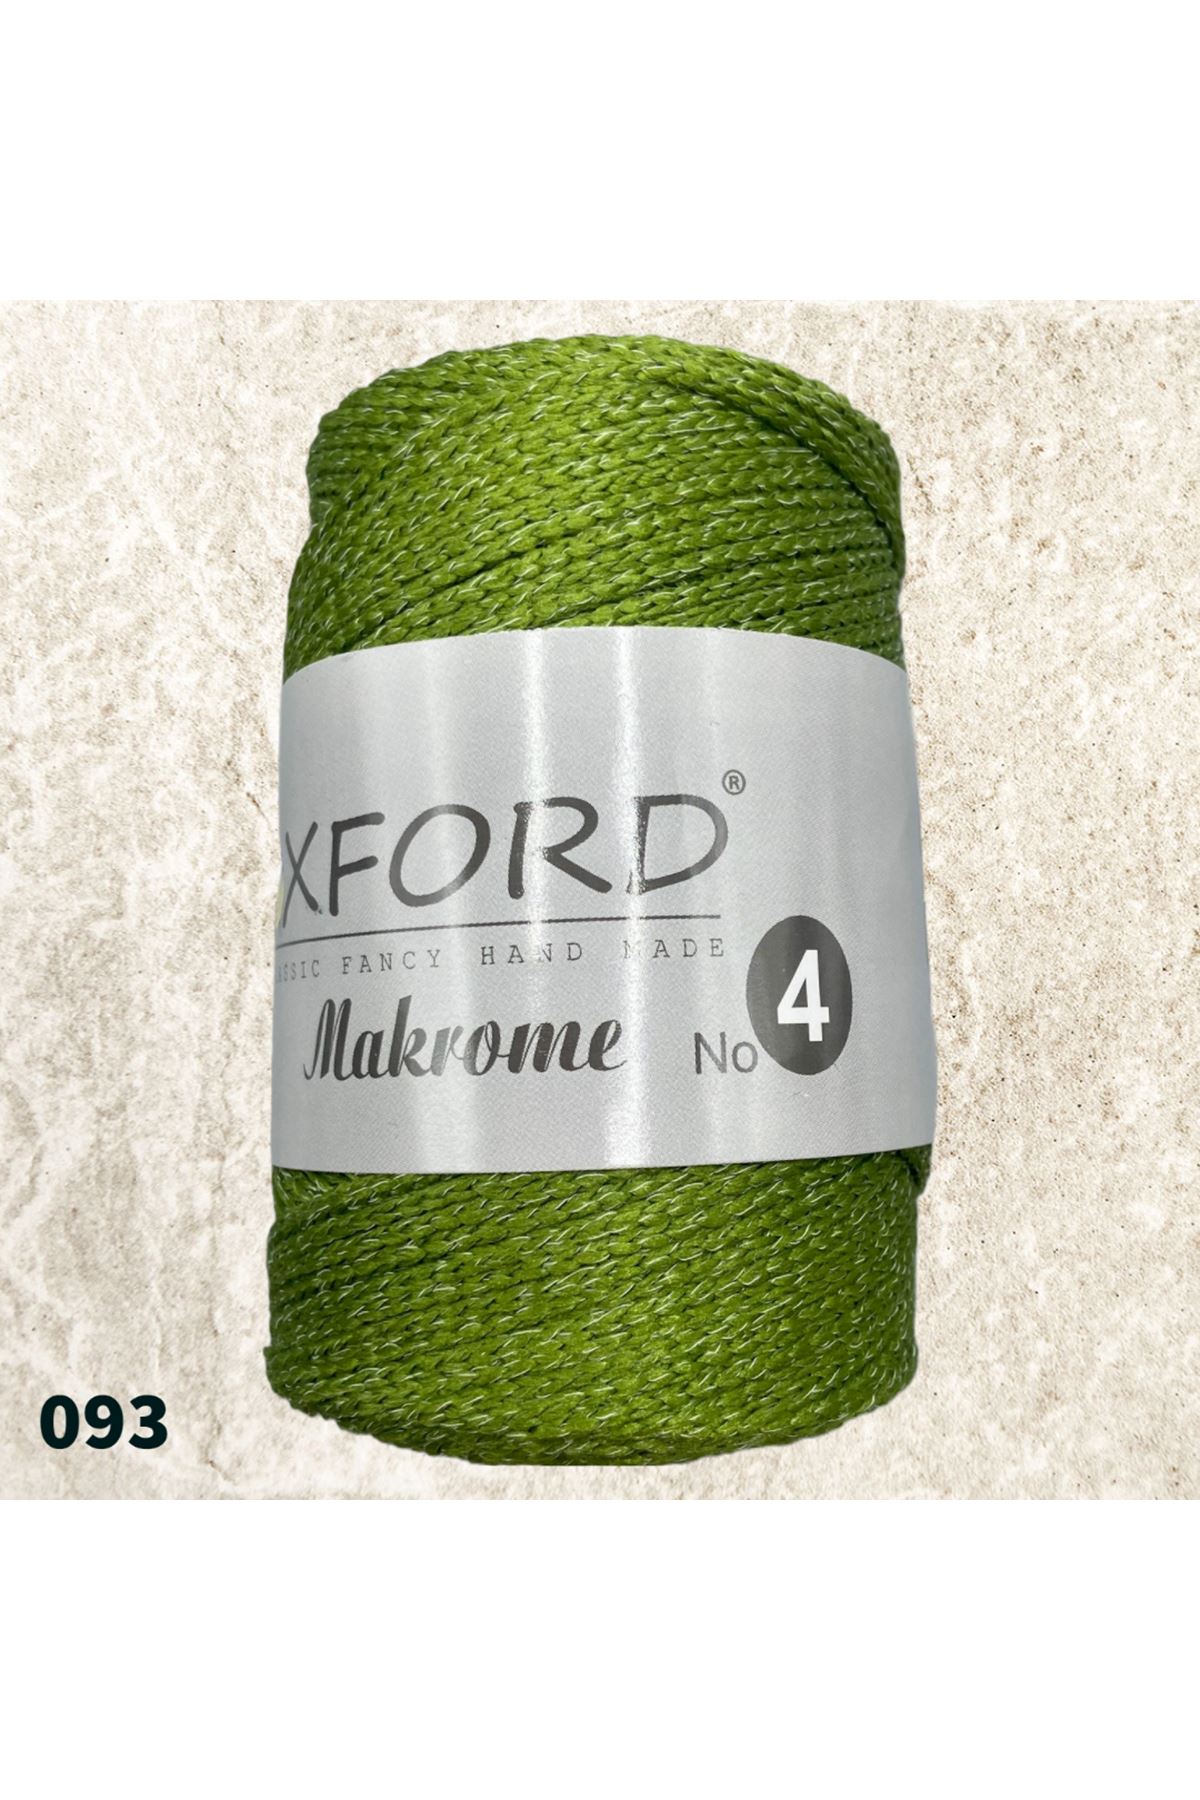 Oxford 4 No Makrome - 93 Yağ Yeşili